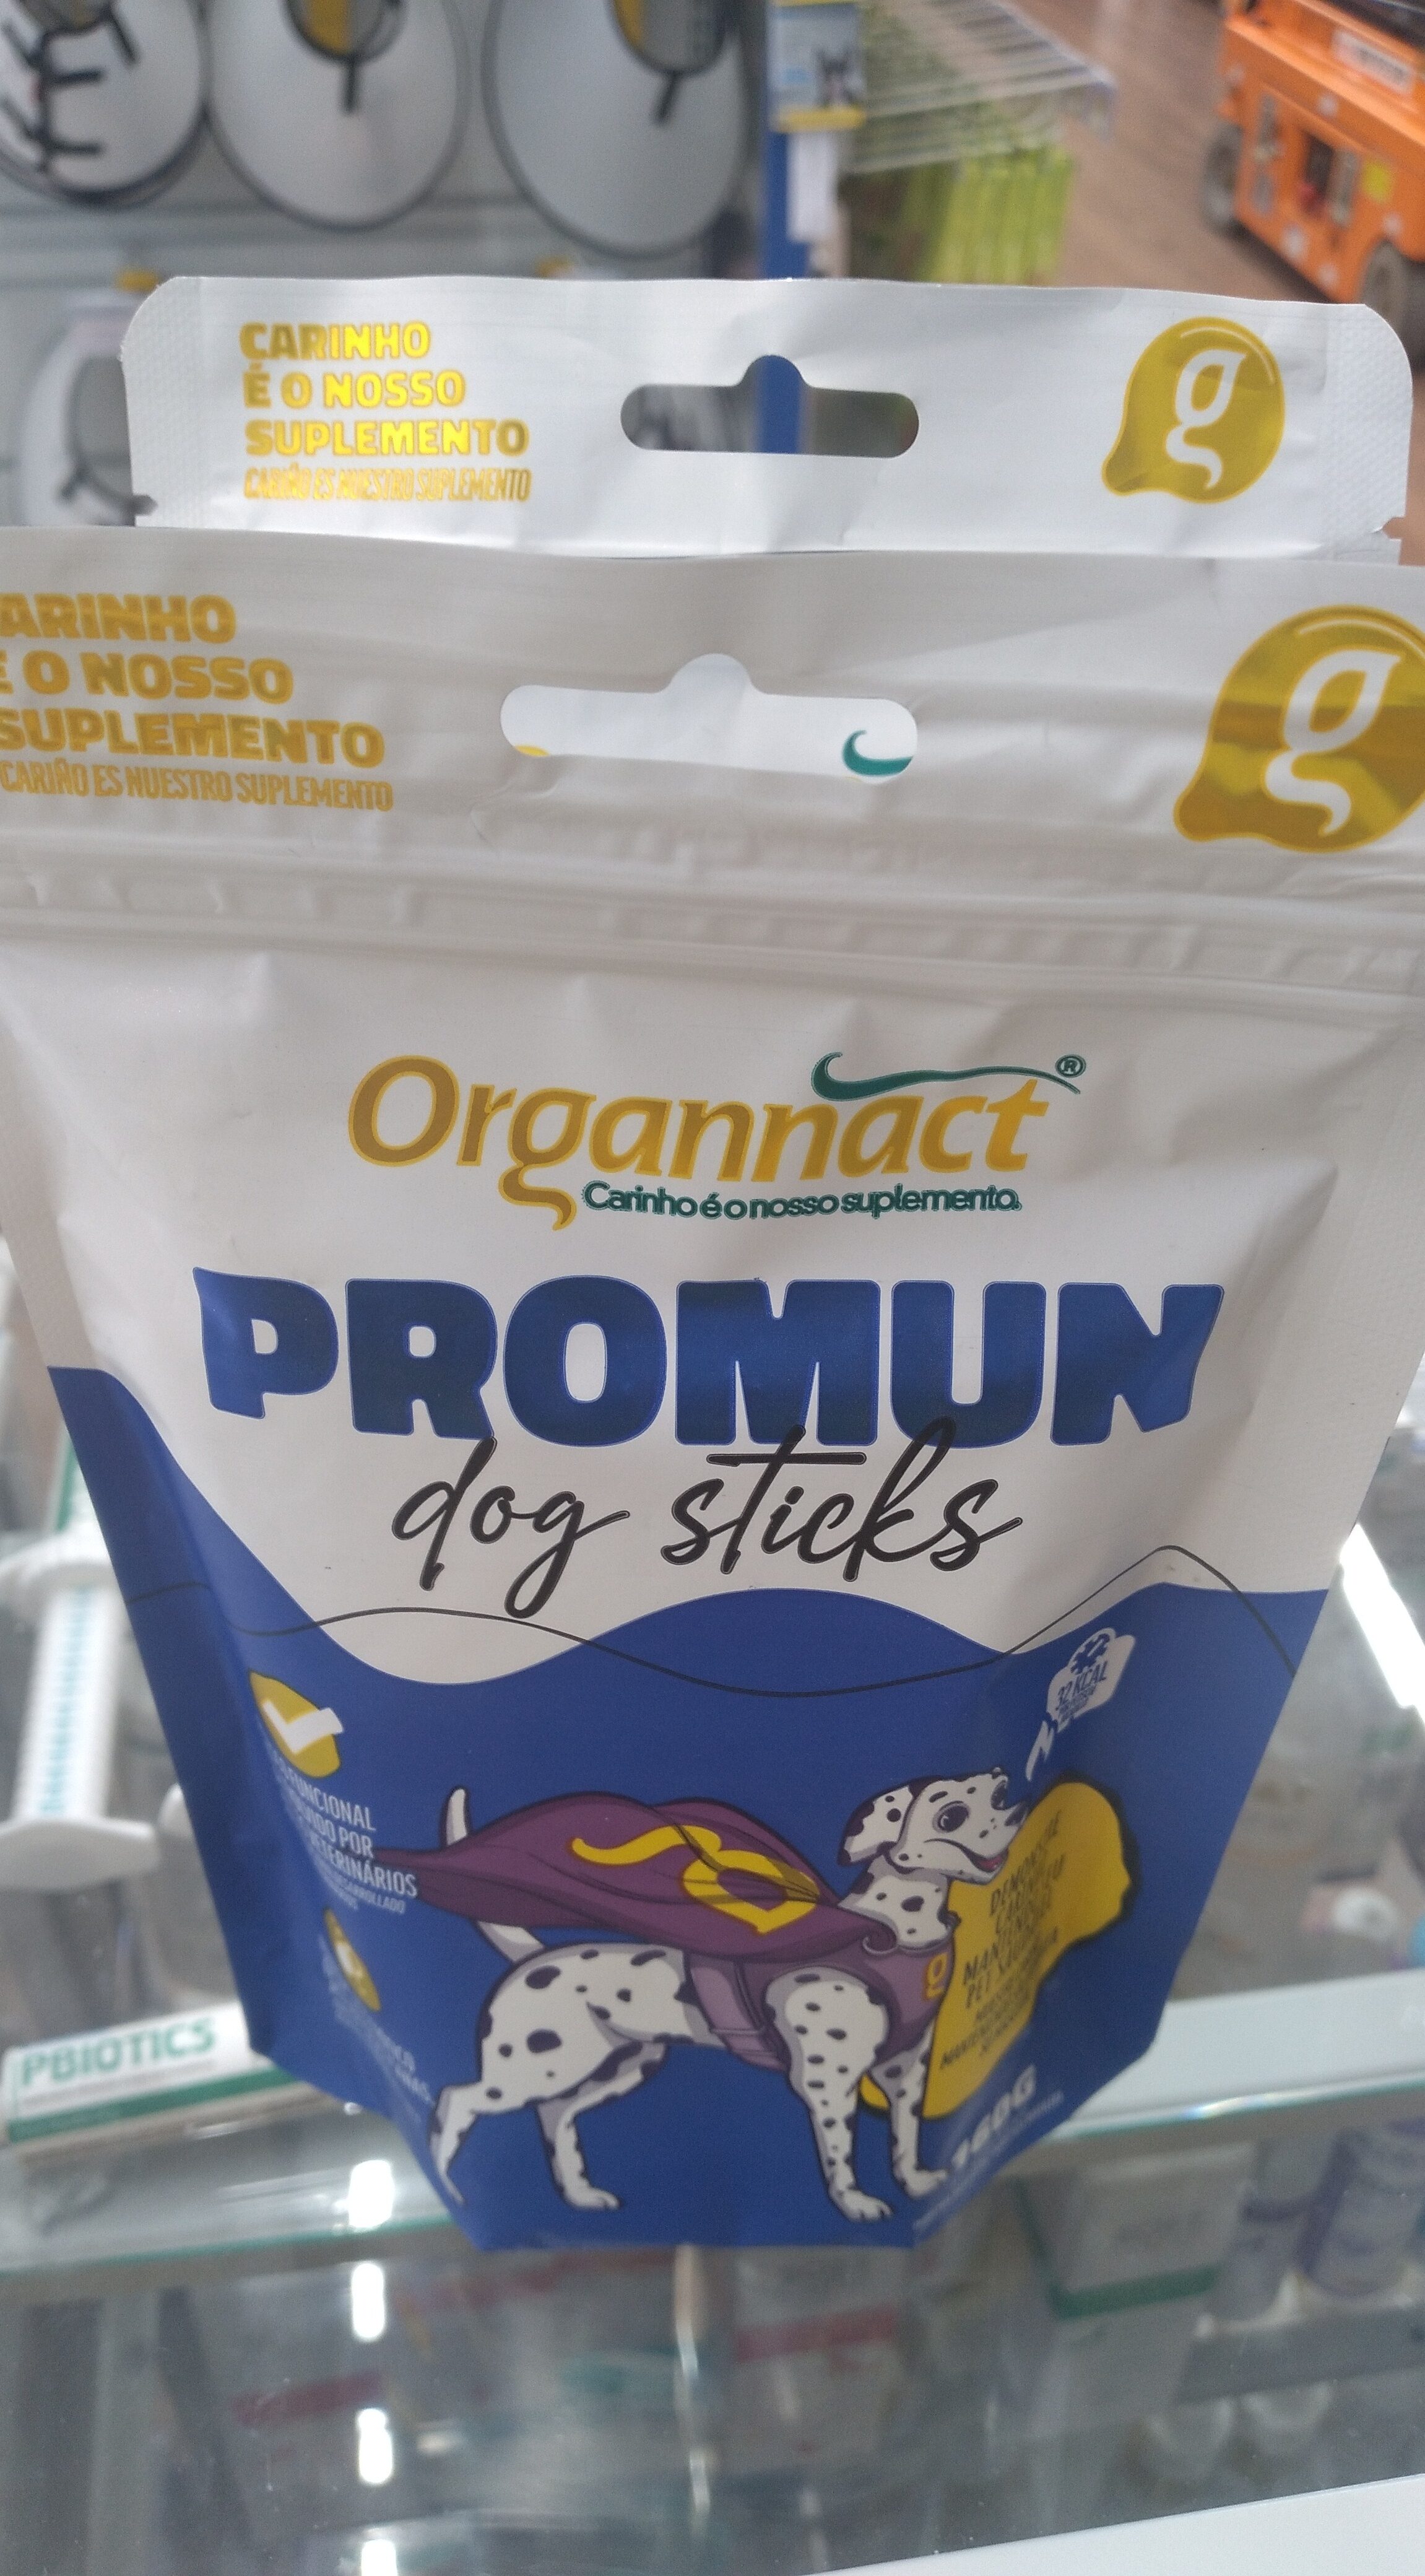 Supl. Organnact Promun dog sticks - Product - pt